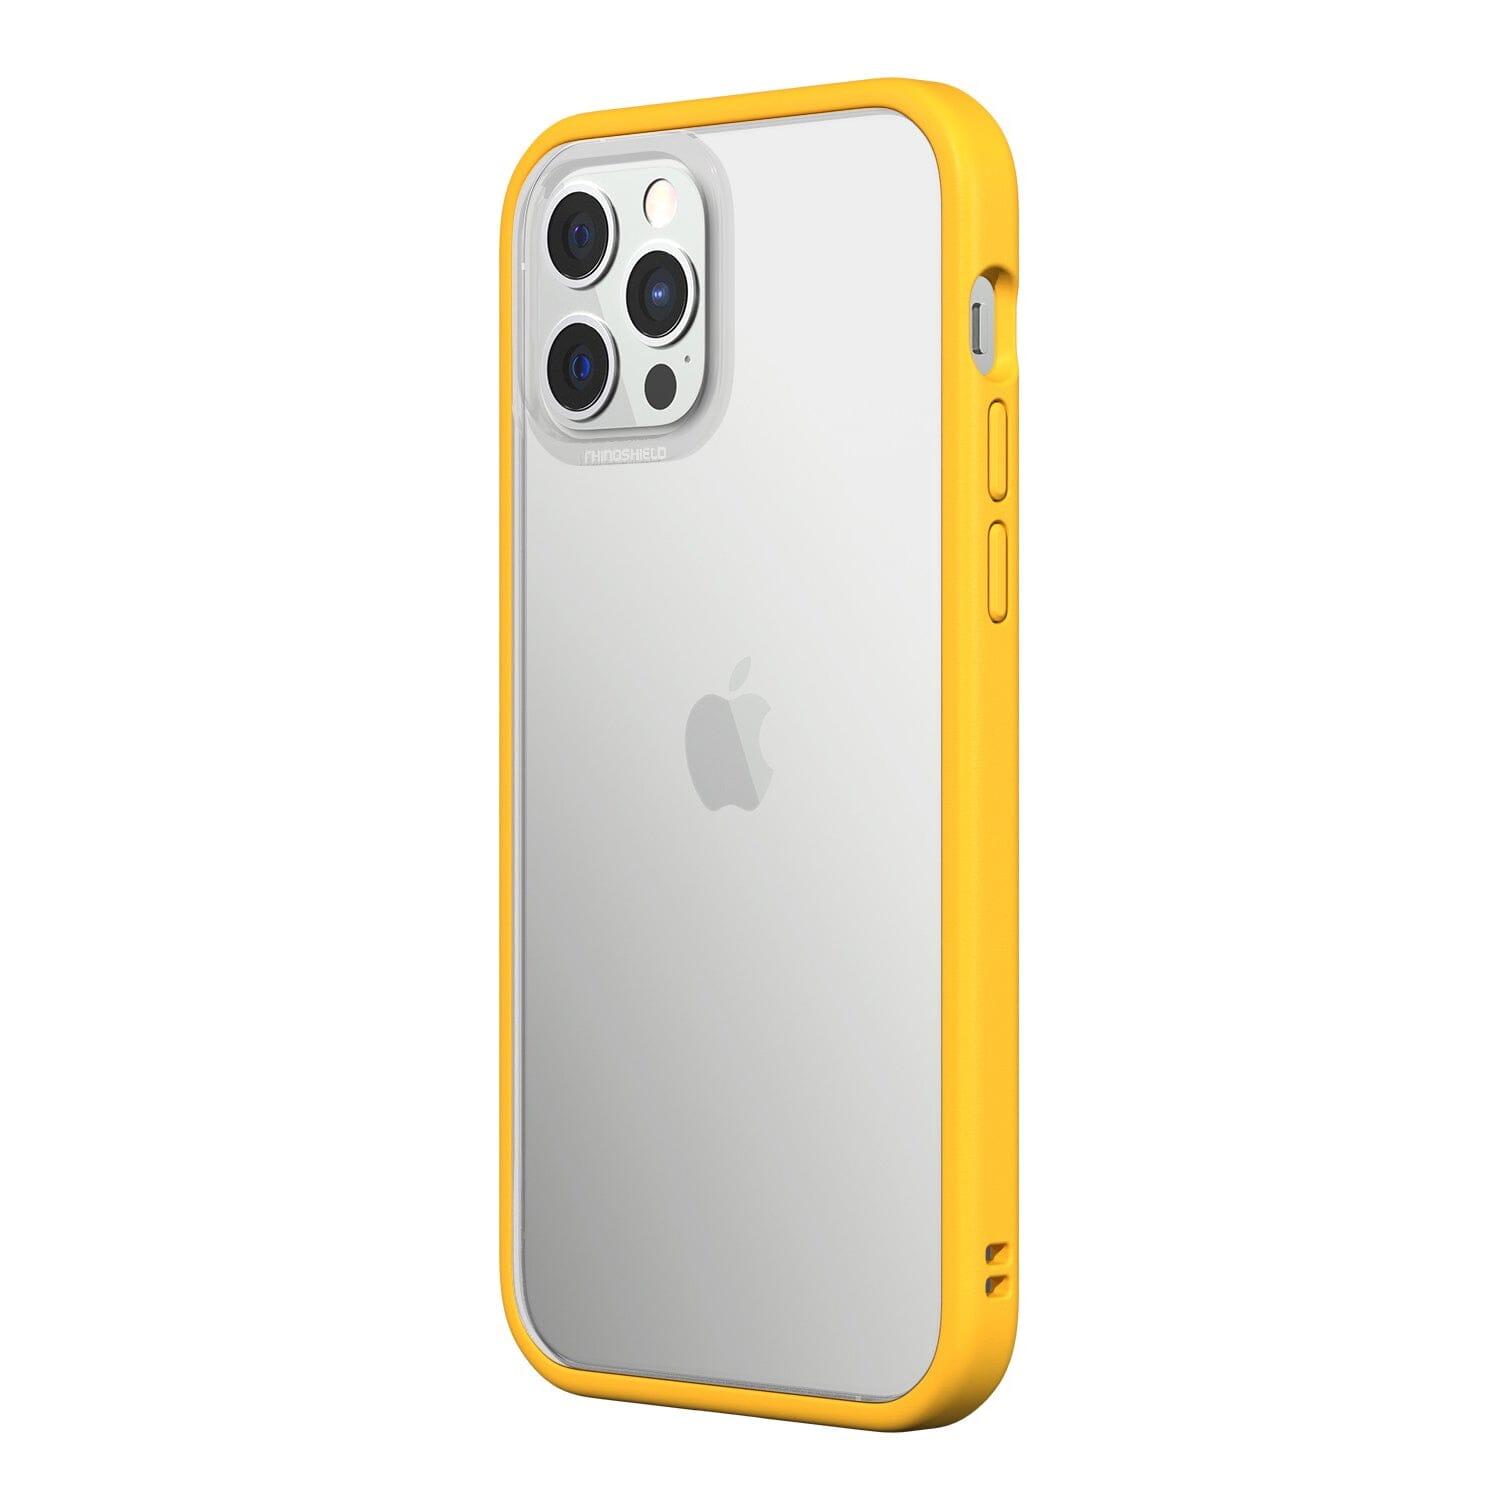 RhinoShield Mod NX Modular Case for iPhone 12 Series (2020) iPhone 12 Series RhinoShield iPhone 12/12 Pro 6.1" Yellow 